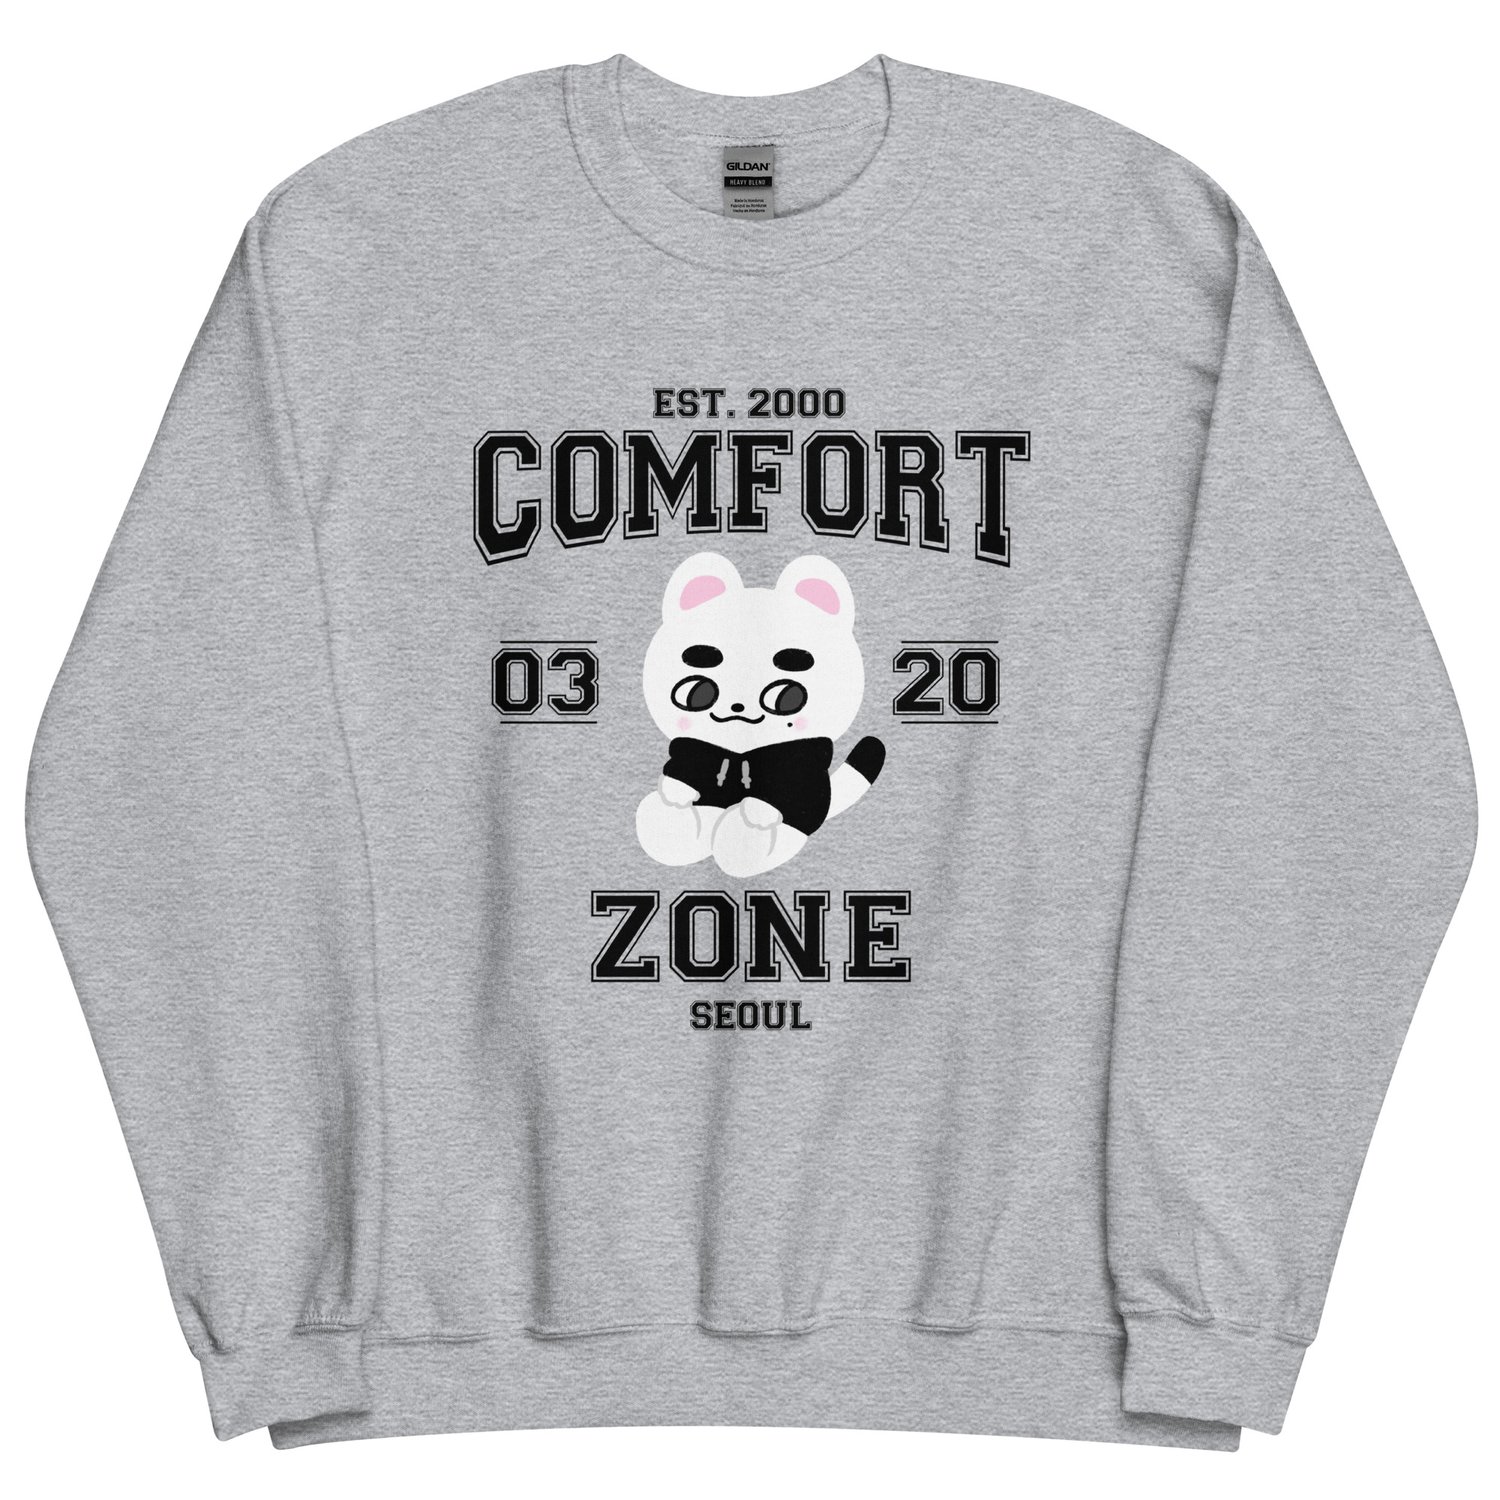 Image of 0322 comfort zone sweatshirt